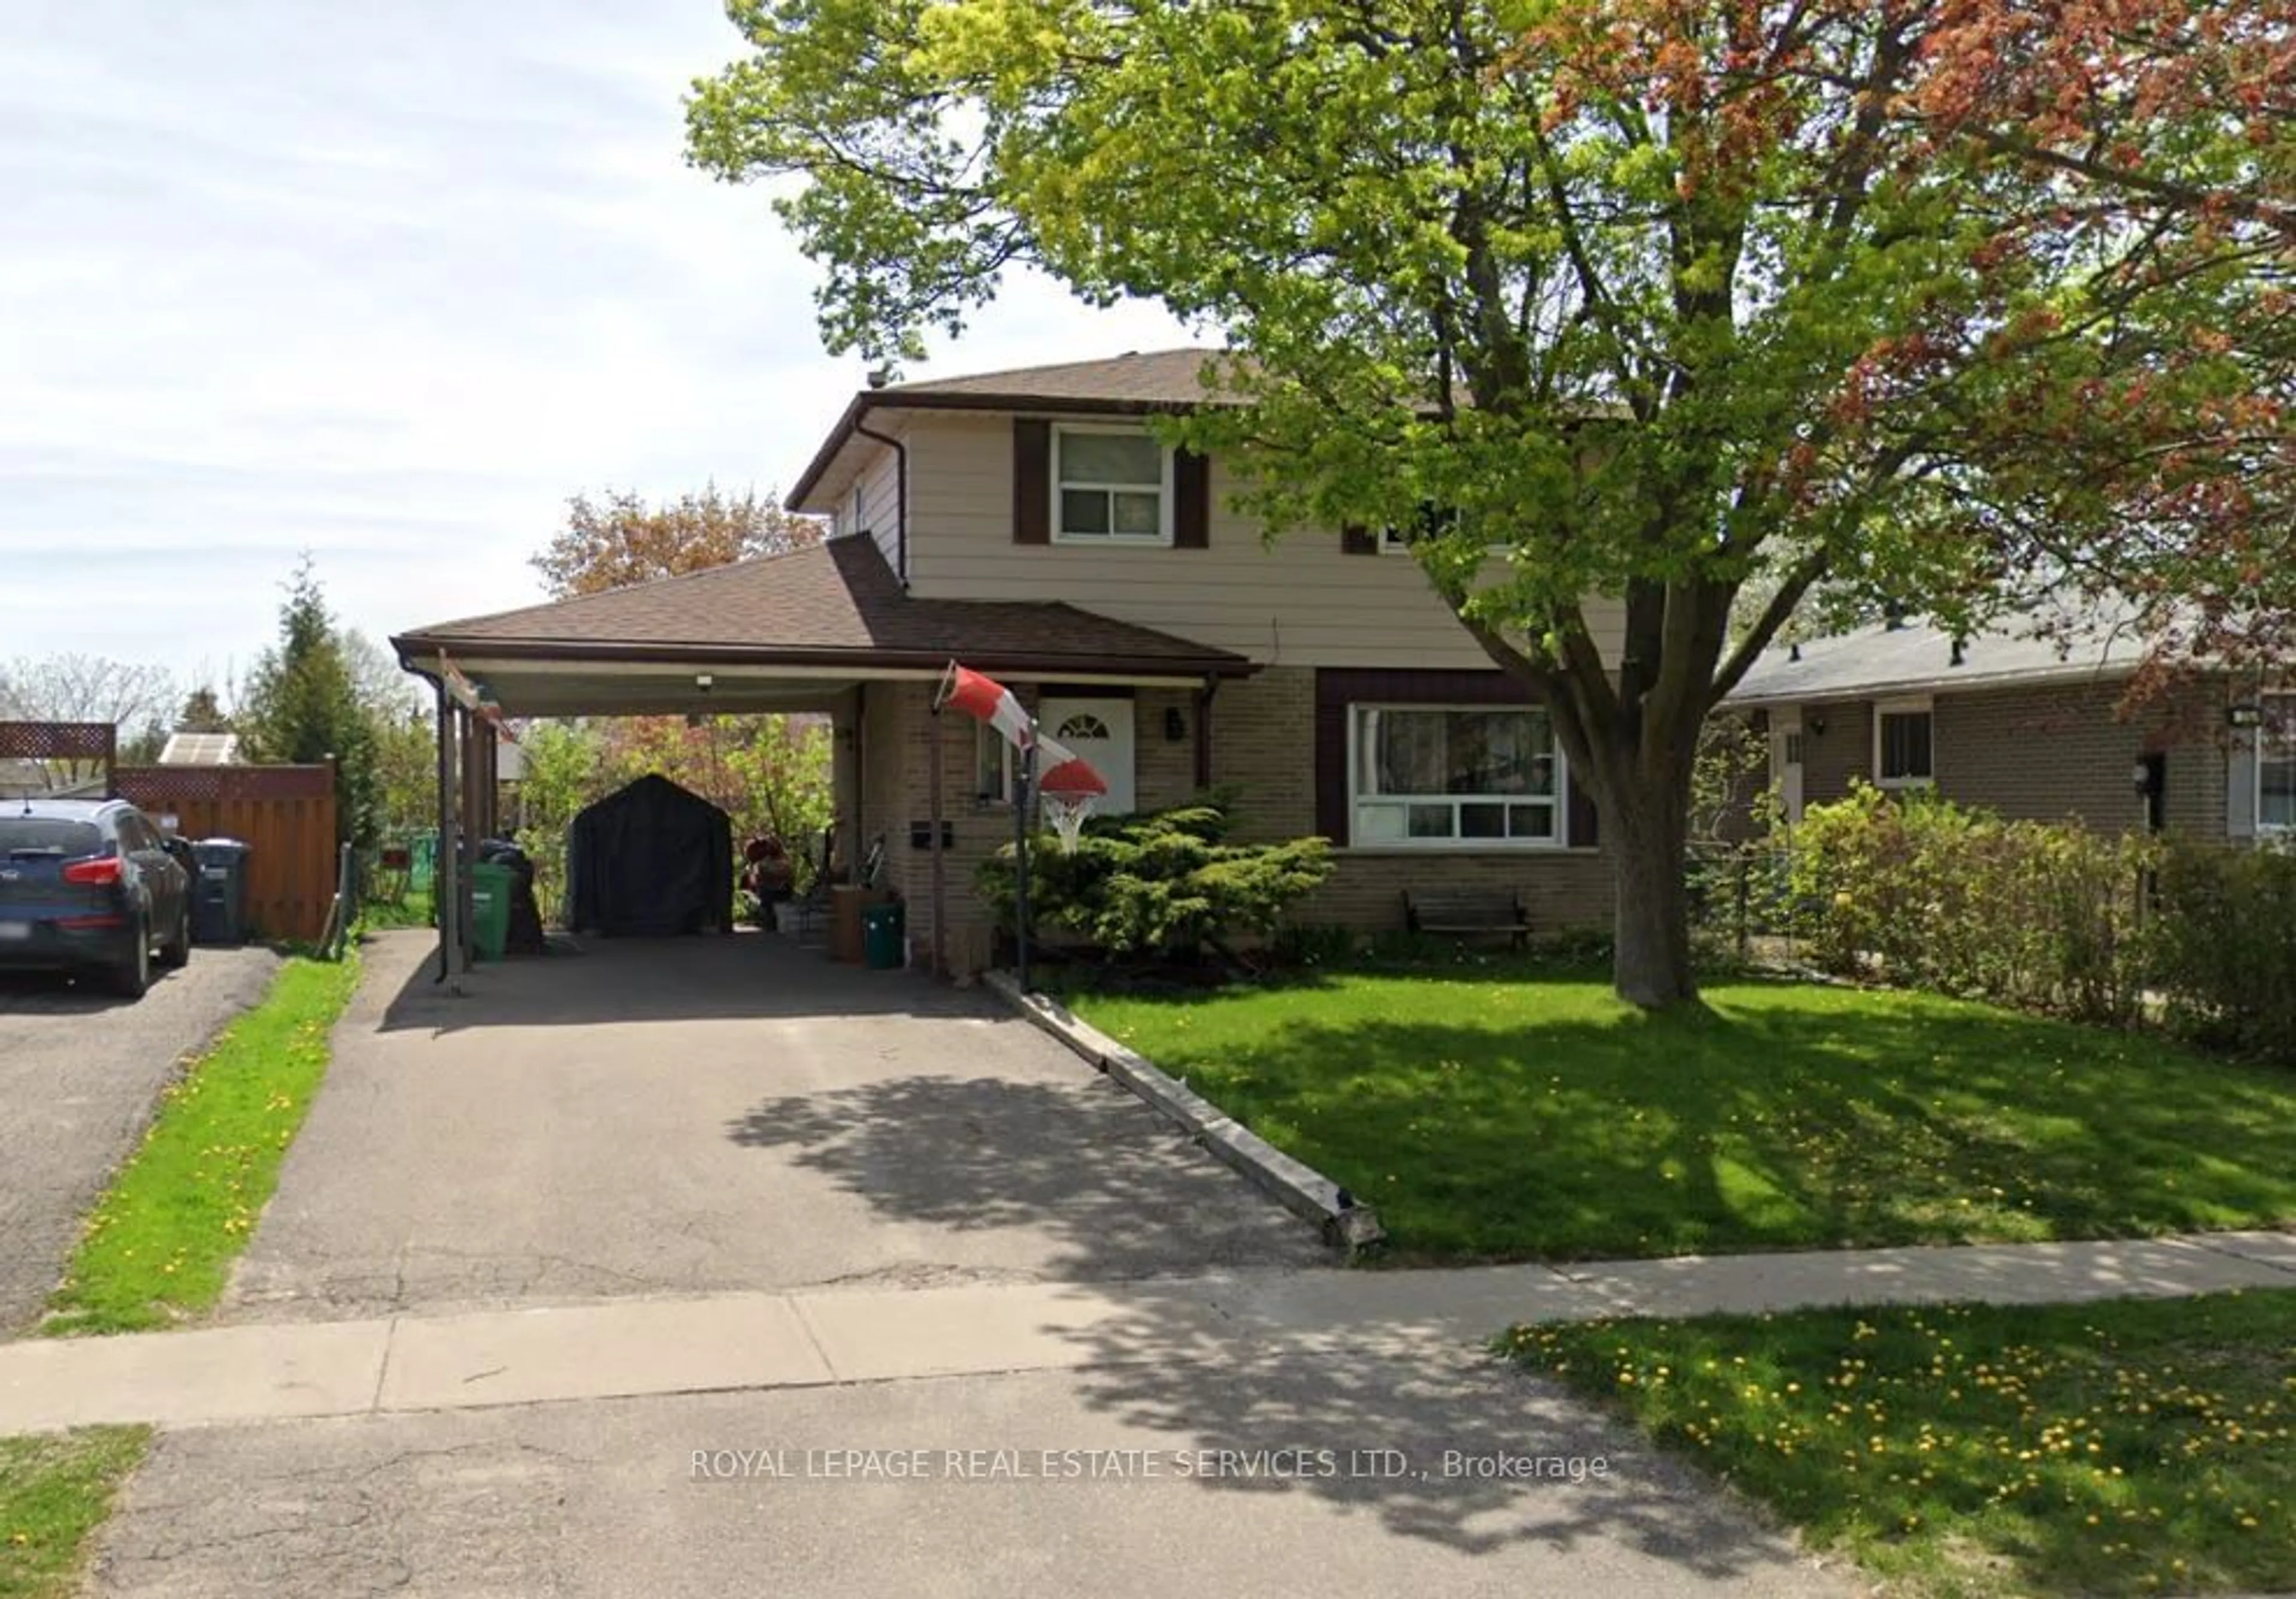 Frontside or backside of a home for 27 Gable Dr, Brampton Ontario L6V 2H2